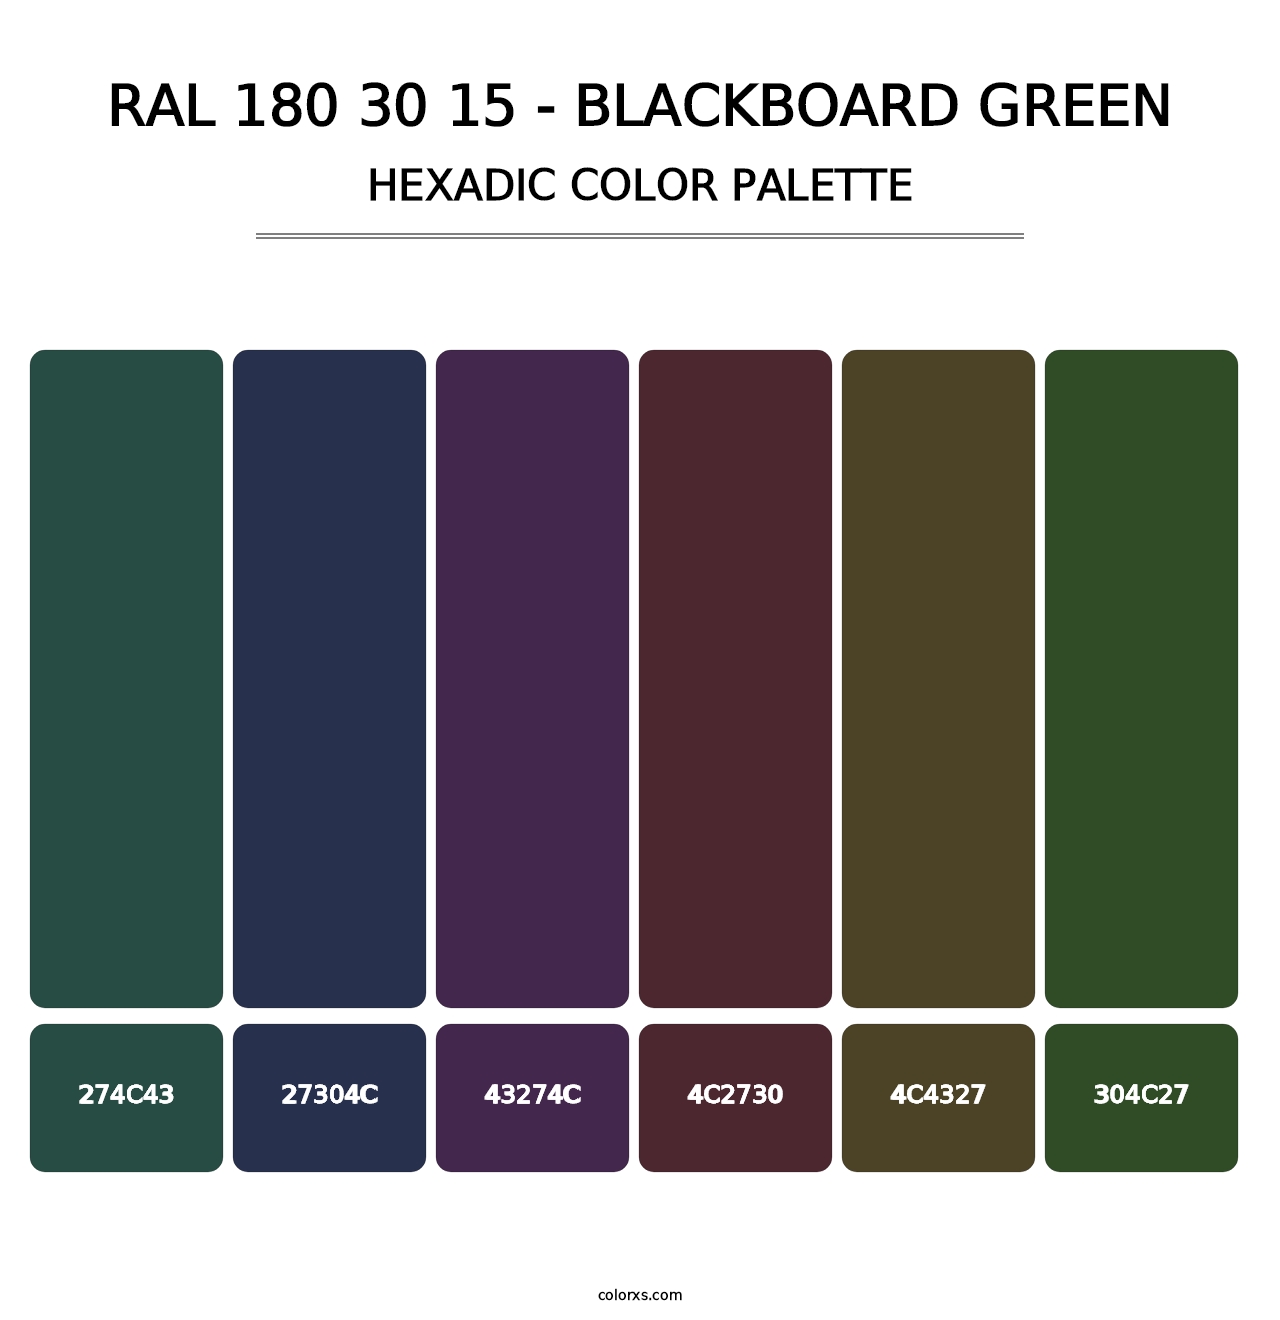 RAL 180 30 15 - Blackboard Green - Hexadic Color Palette